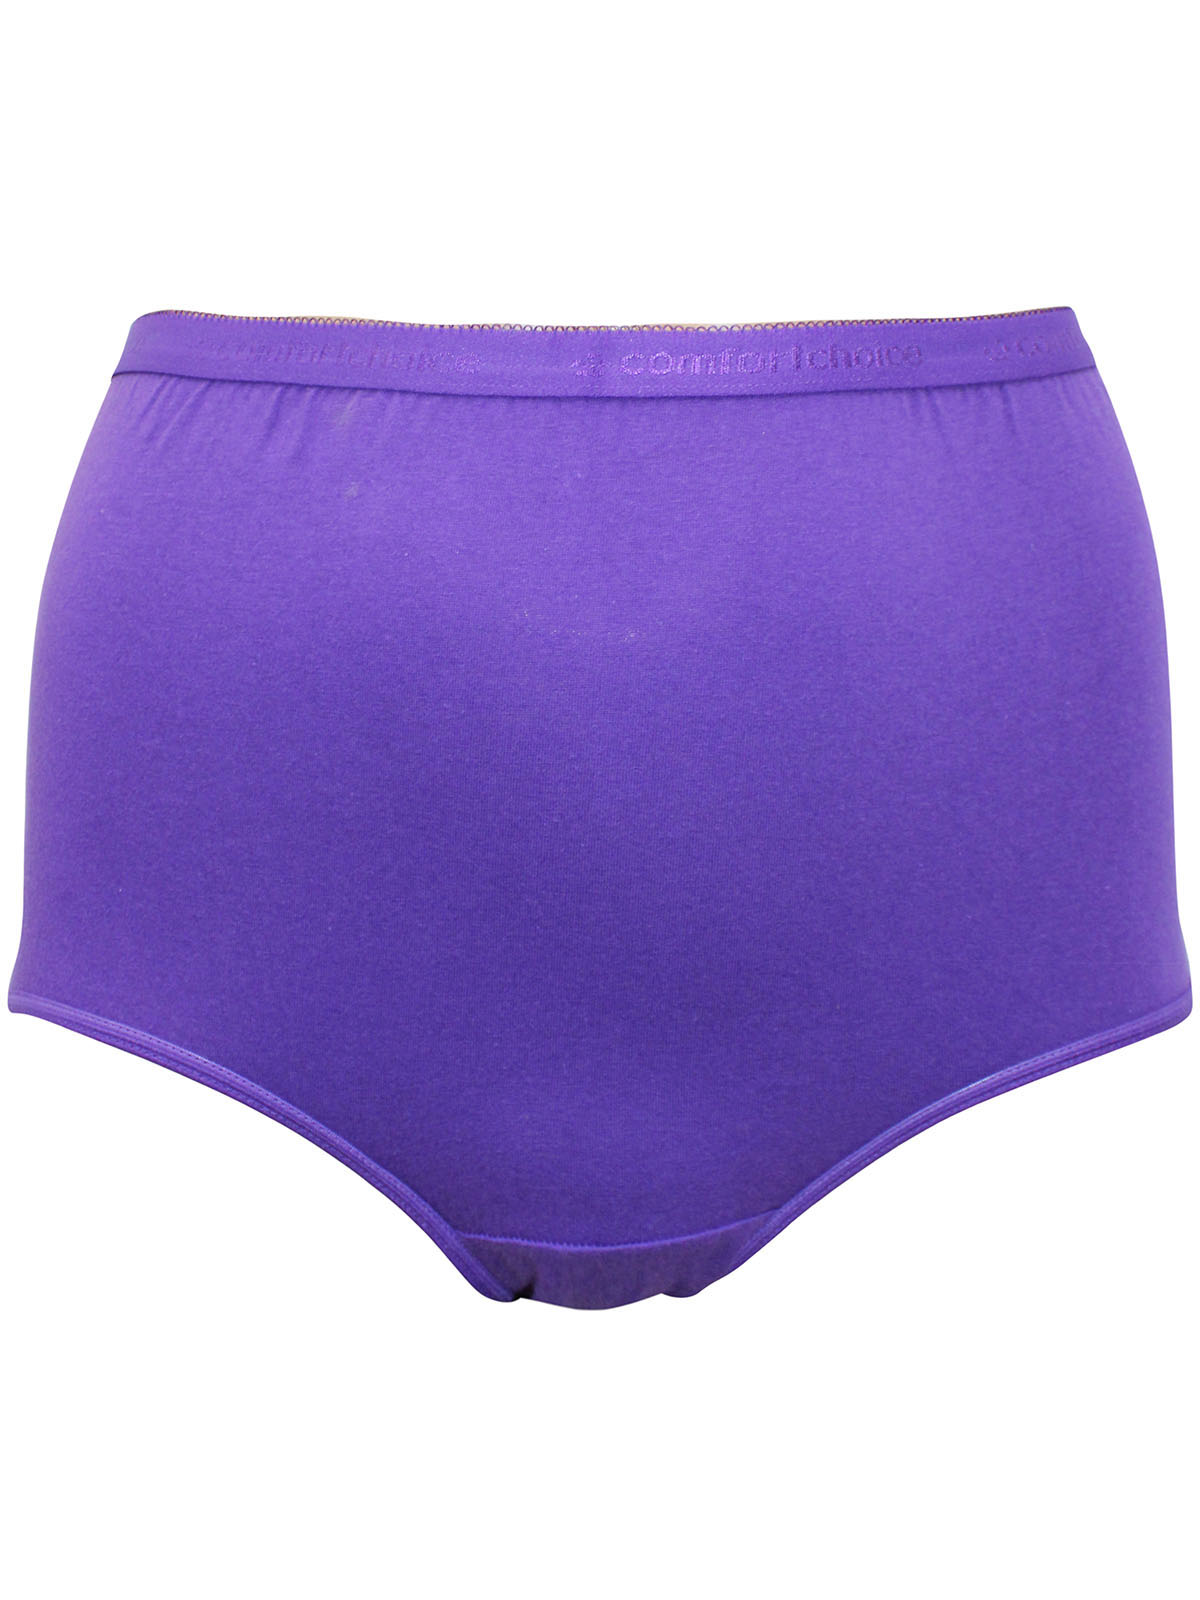 CLZOUD Plus Size Cheeky Brief Purple Lace Womens Underwear Cotton